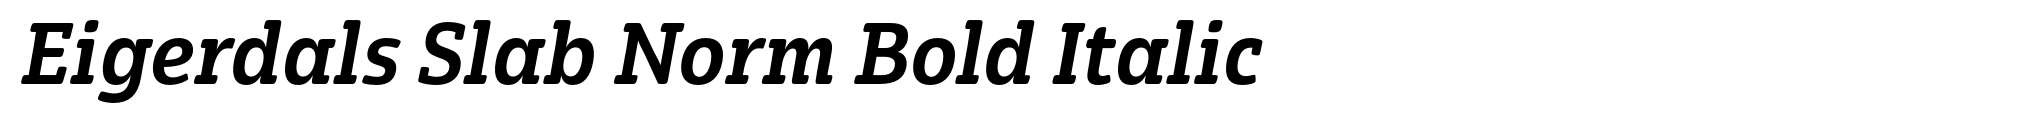 Eigerdals Slab Norm Bold Italic image